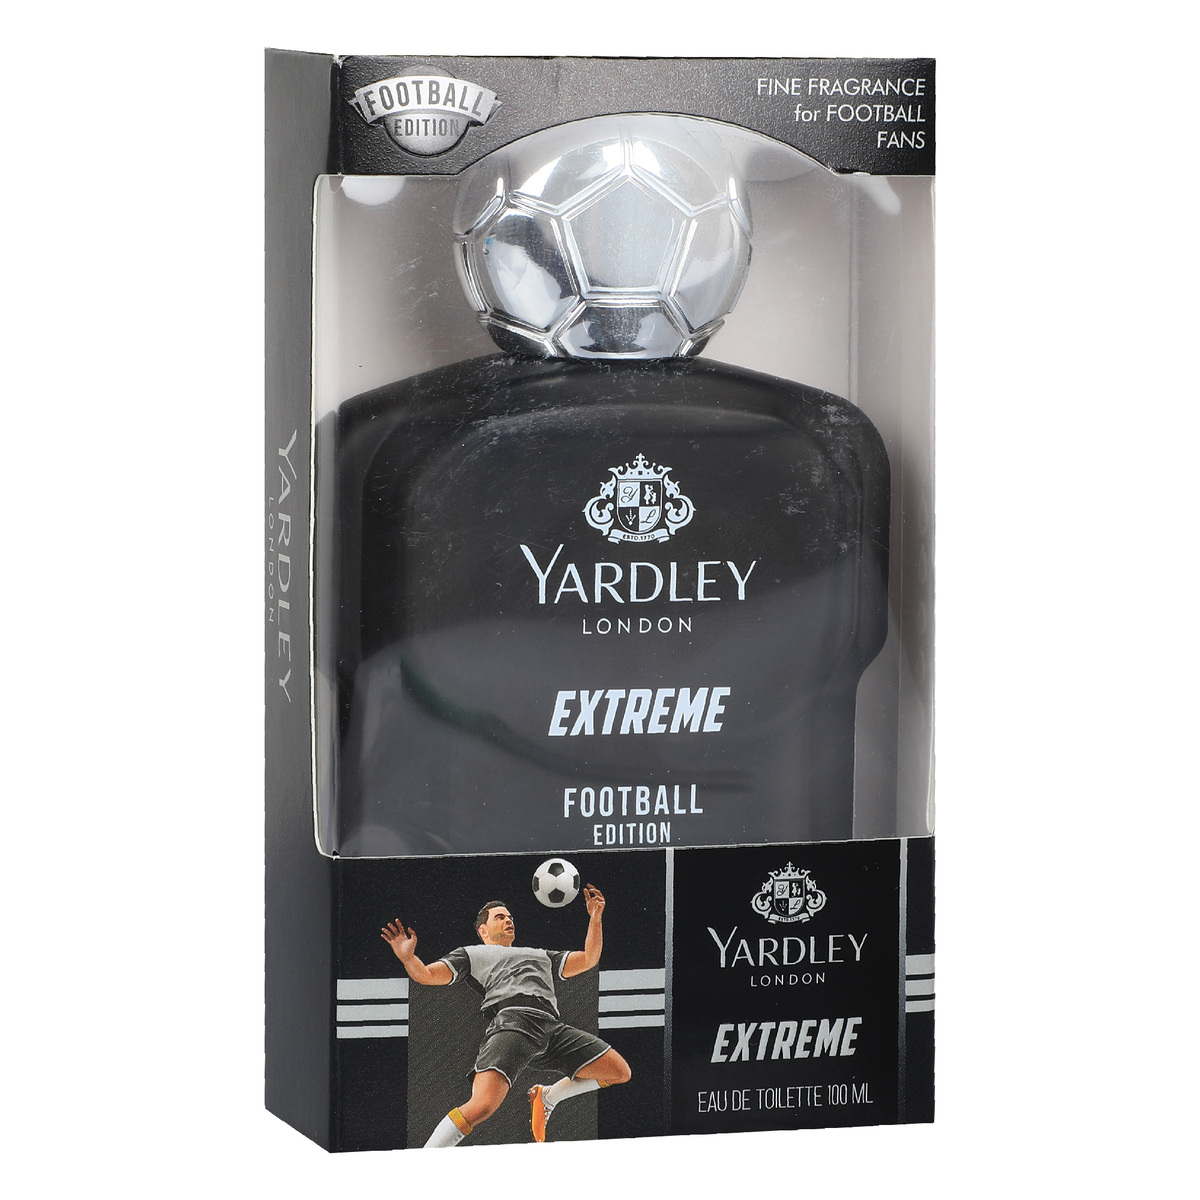 Yardley London EDT, Football Edition Extreme, 100 ml